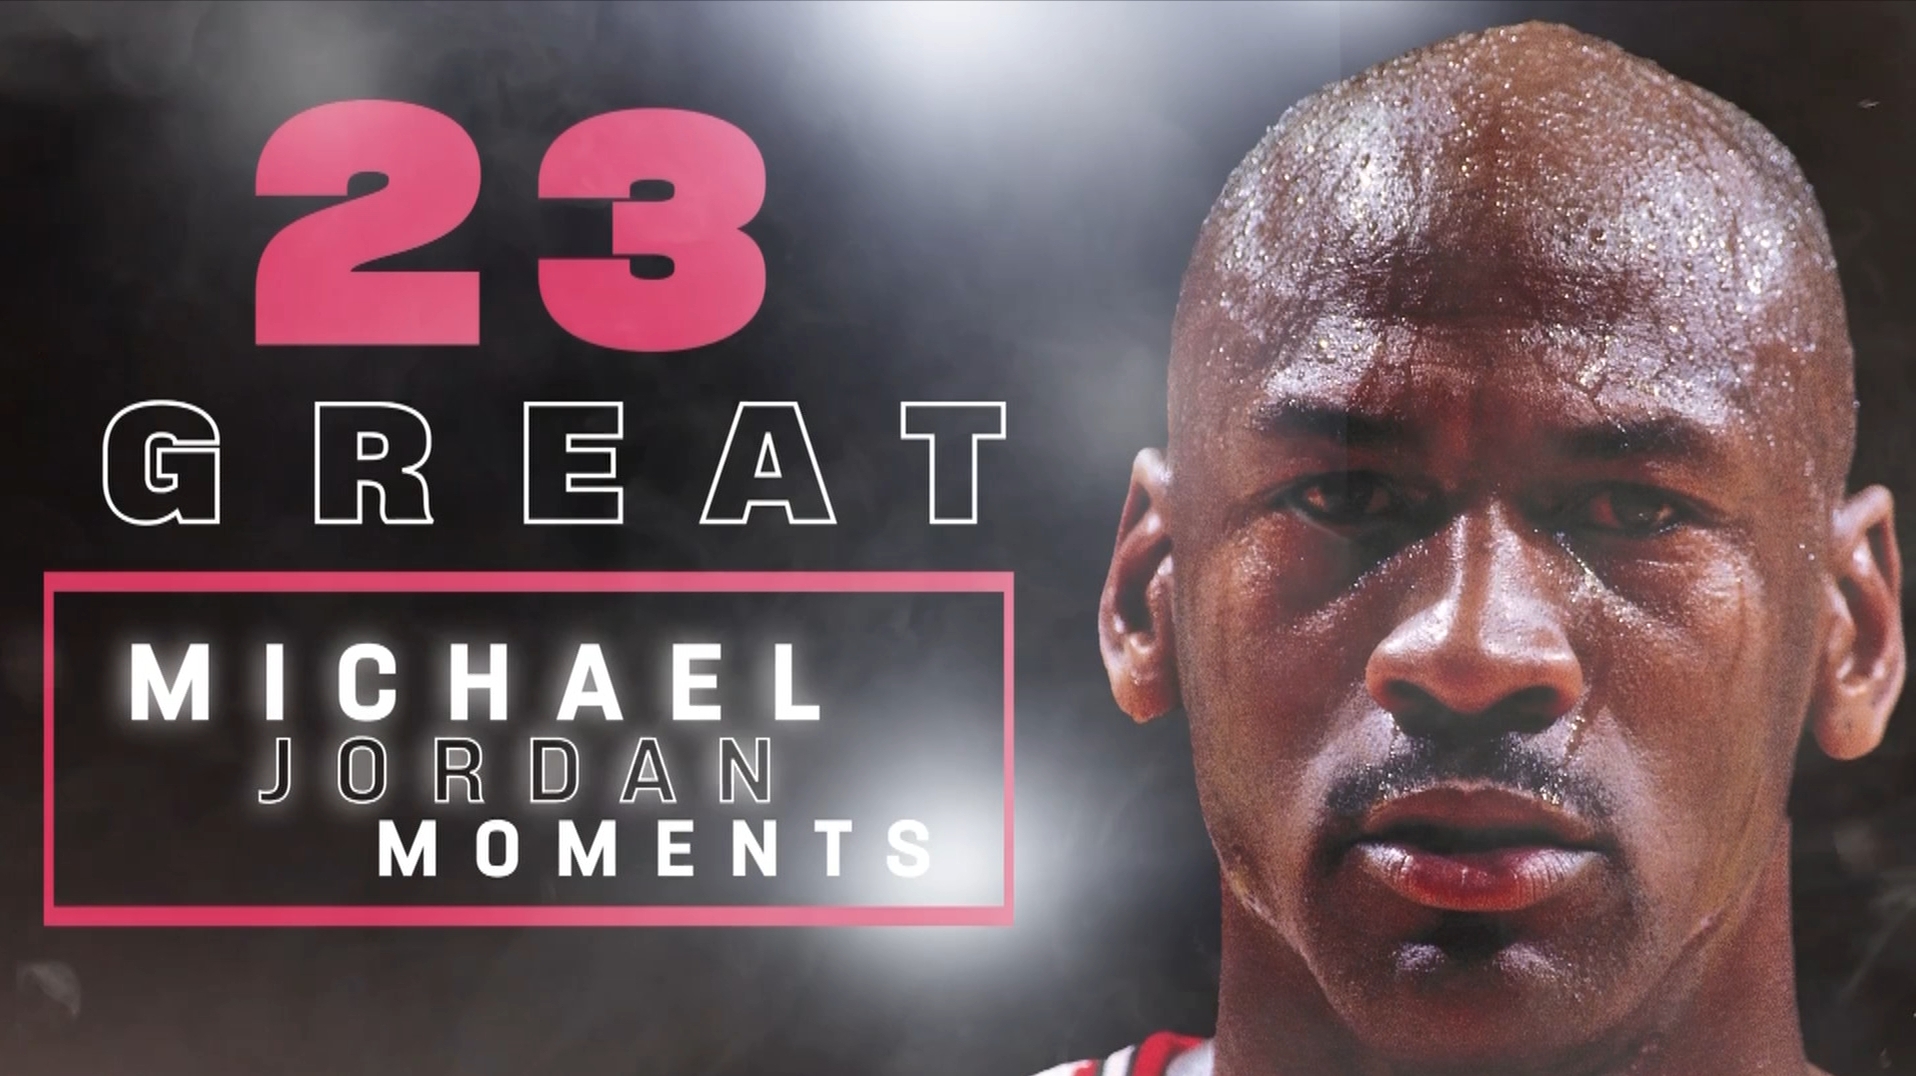 23 of Michael Jordan's greatest moments